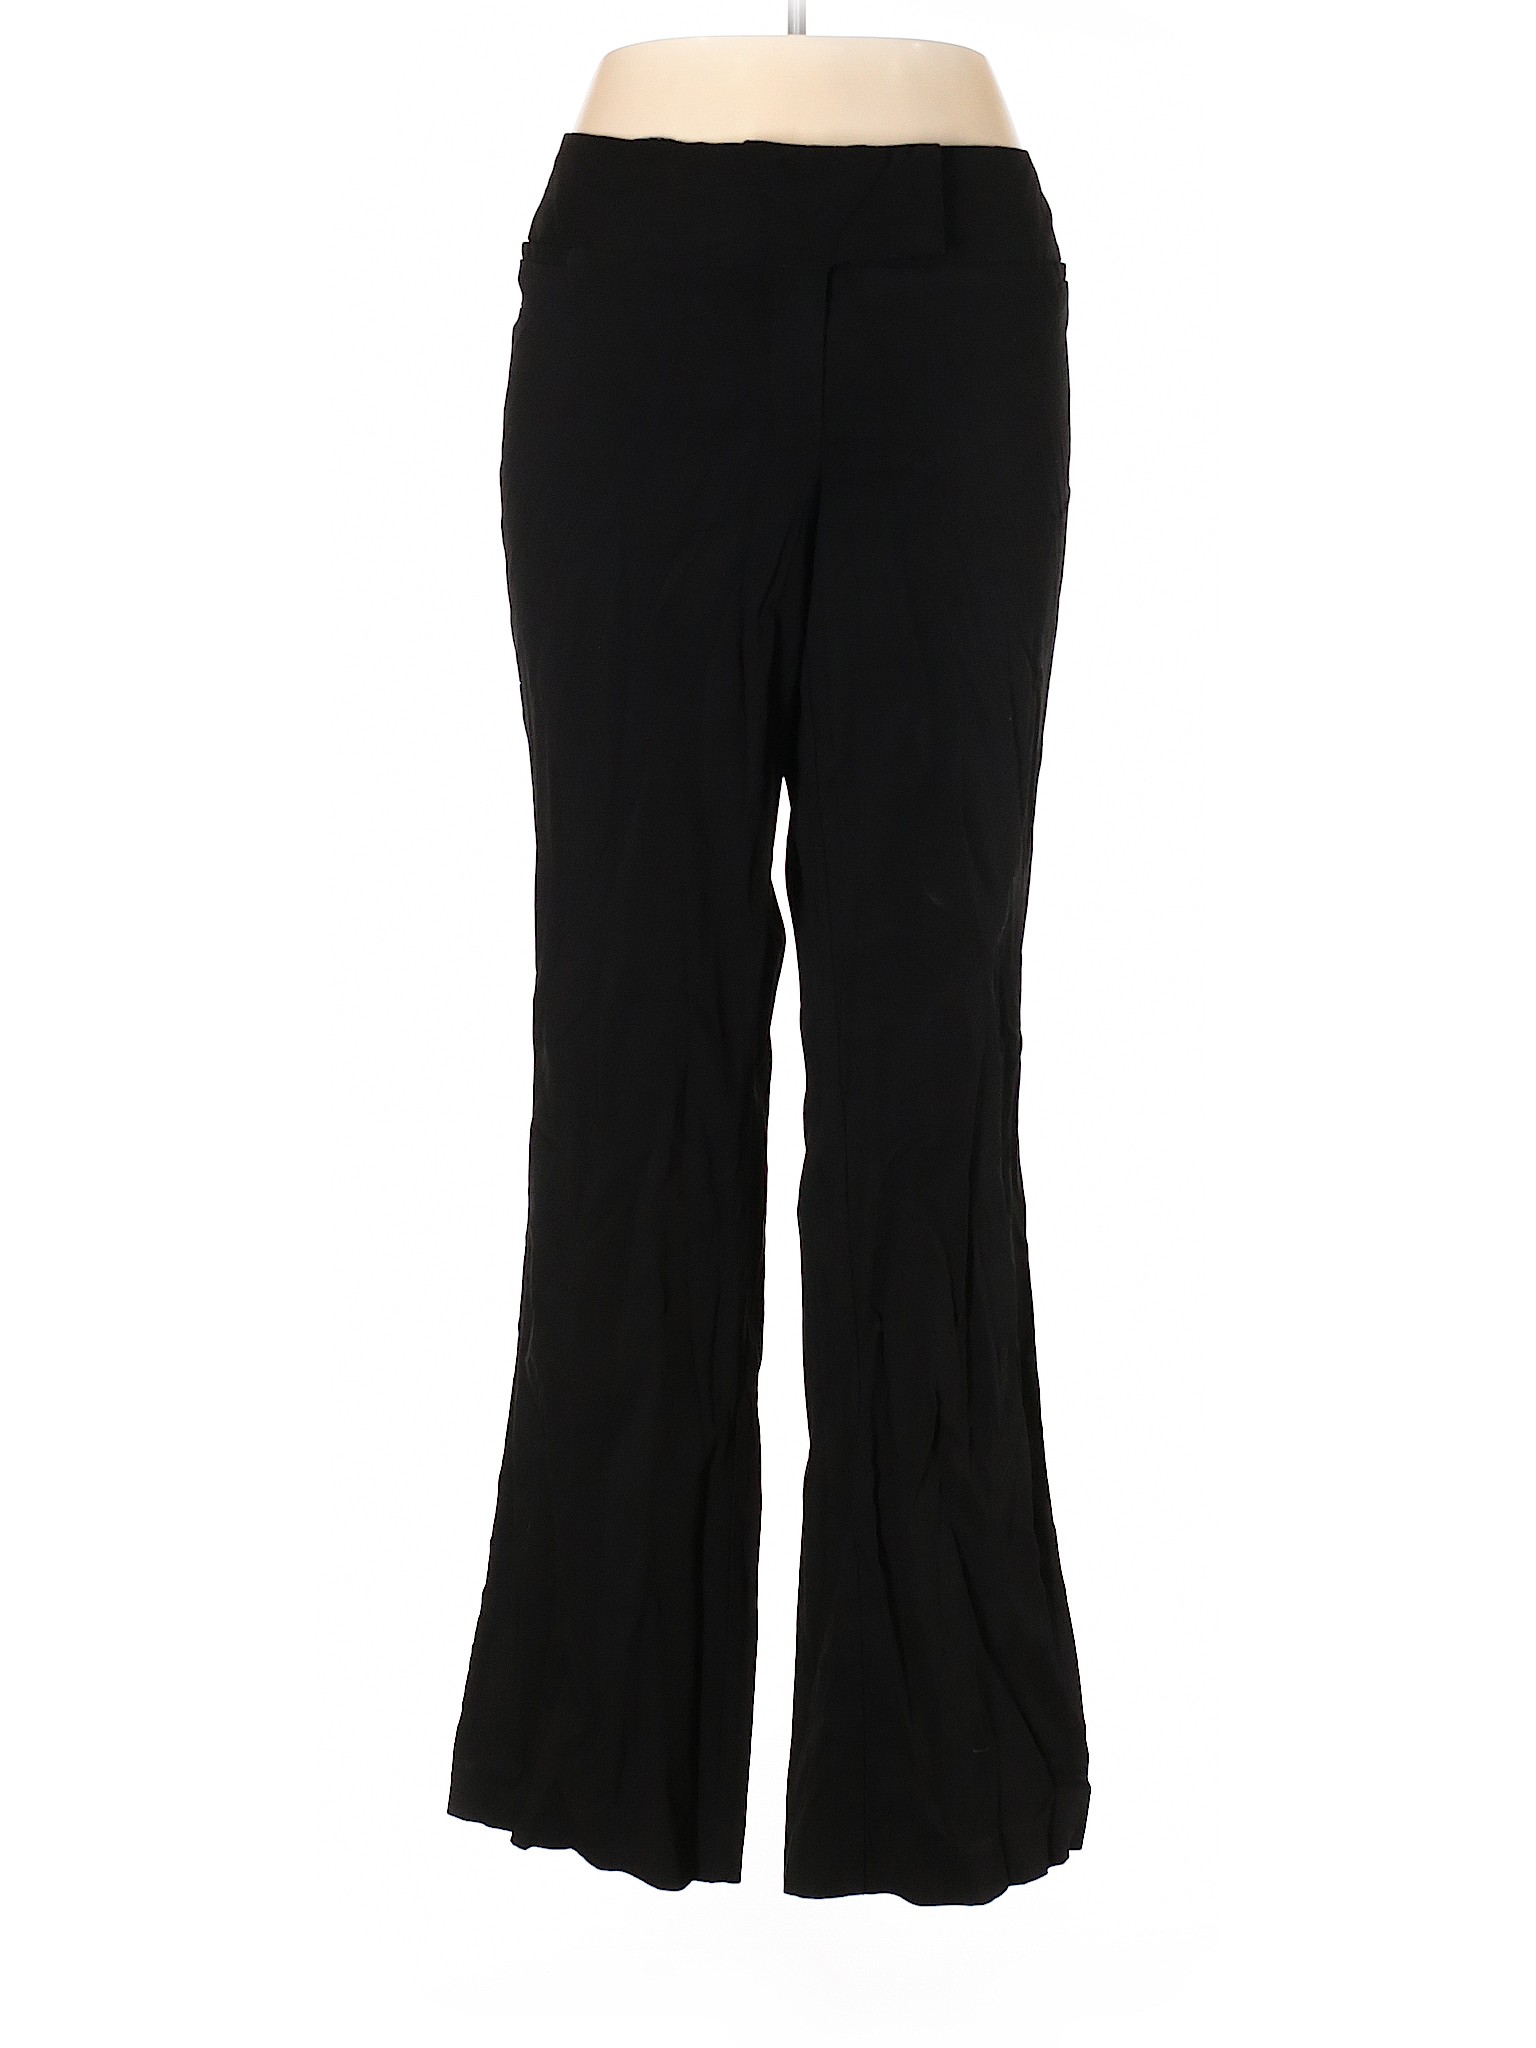 Torrid Women Black Dress Pants 18 Plus | eBay